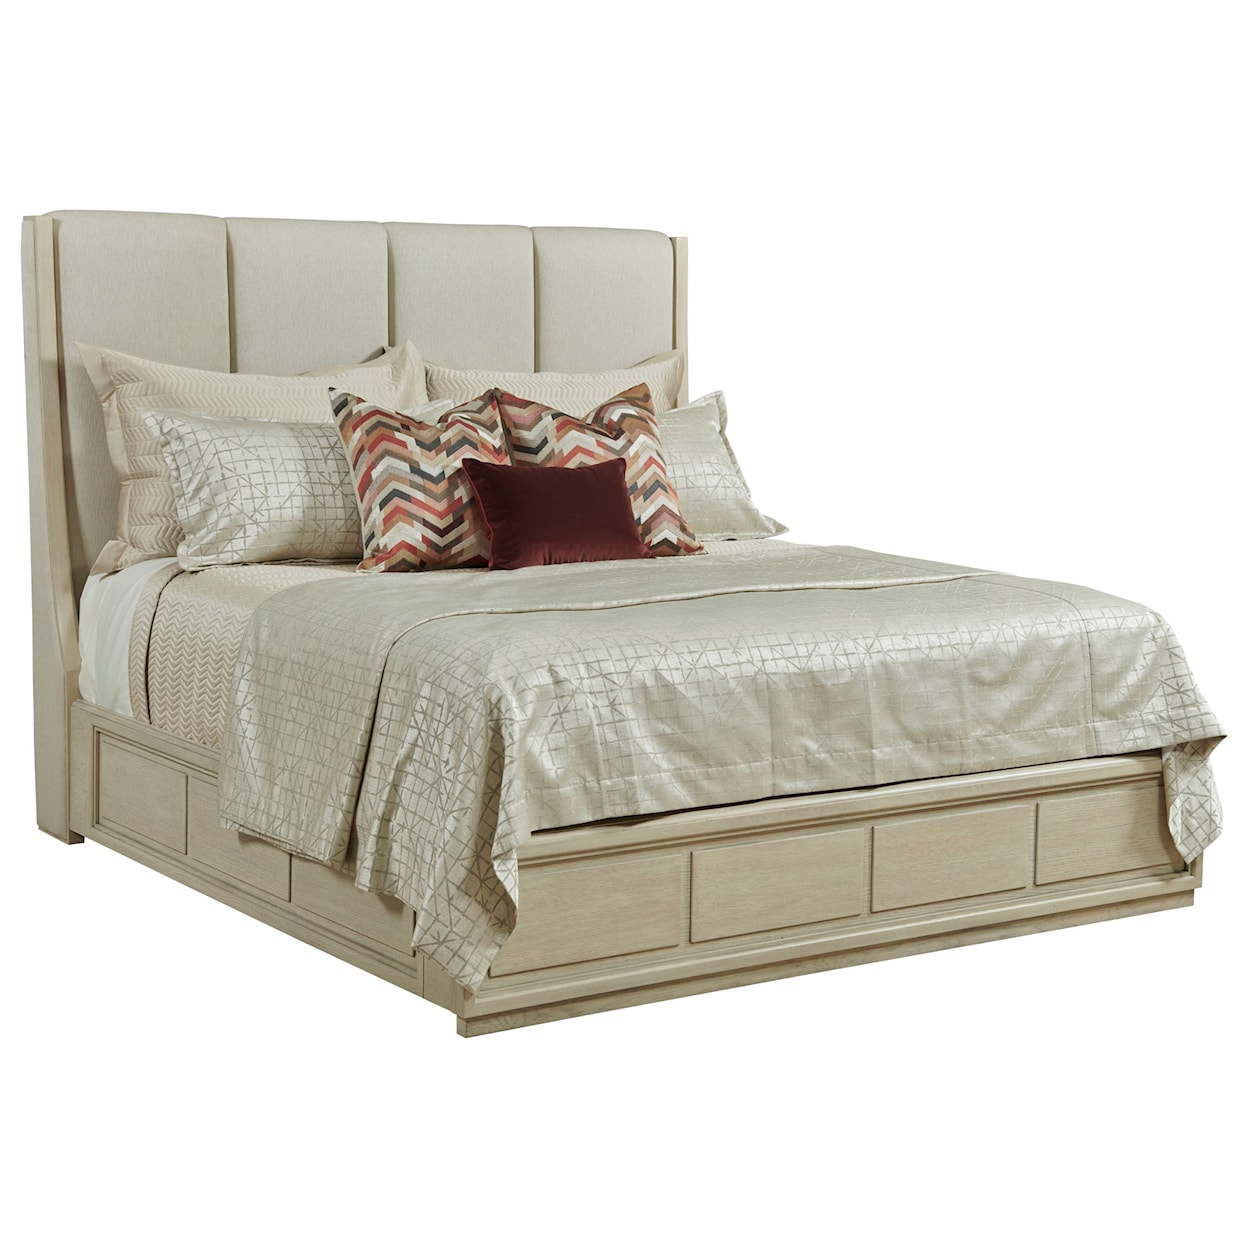 American Drew Lenox California King Upholstered Bed